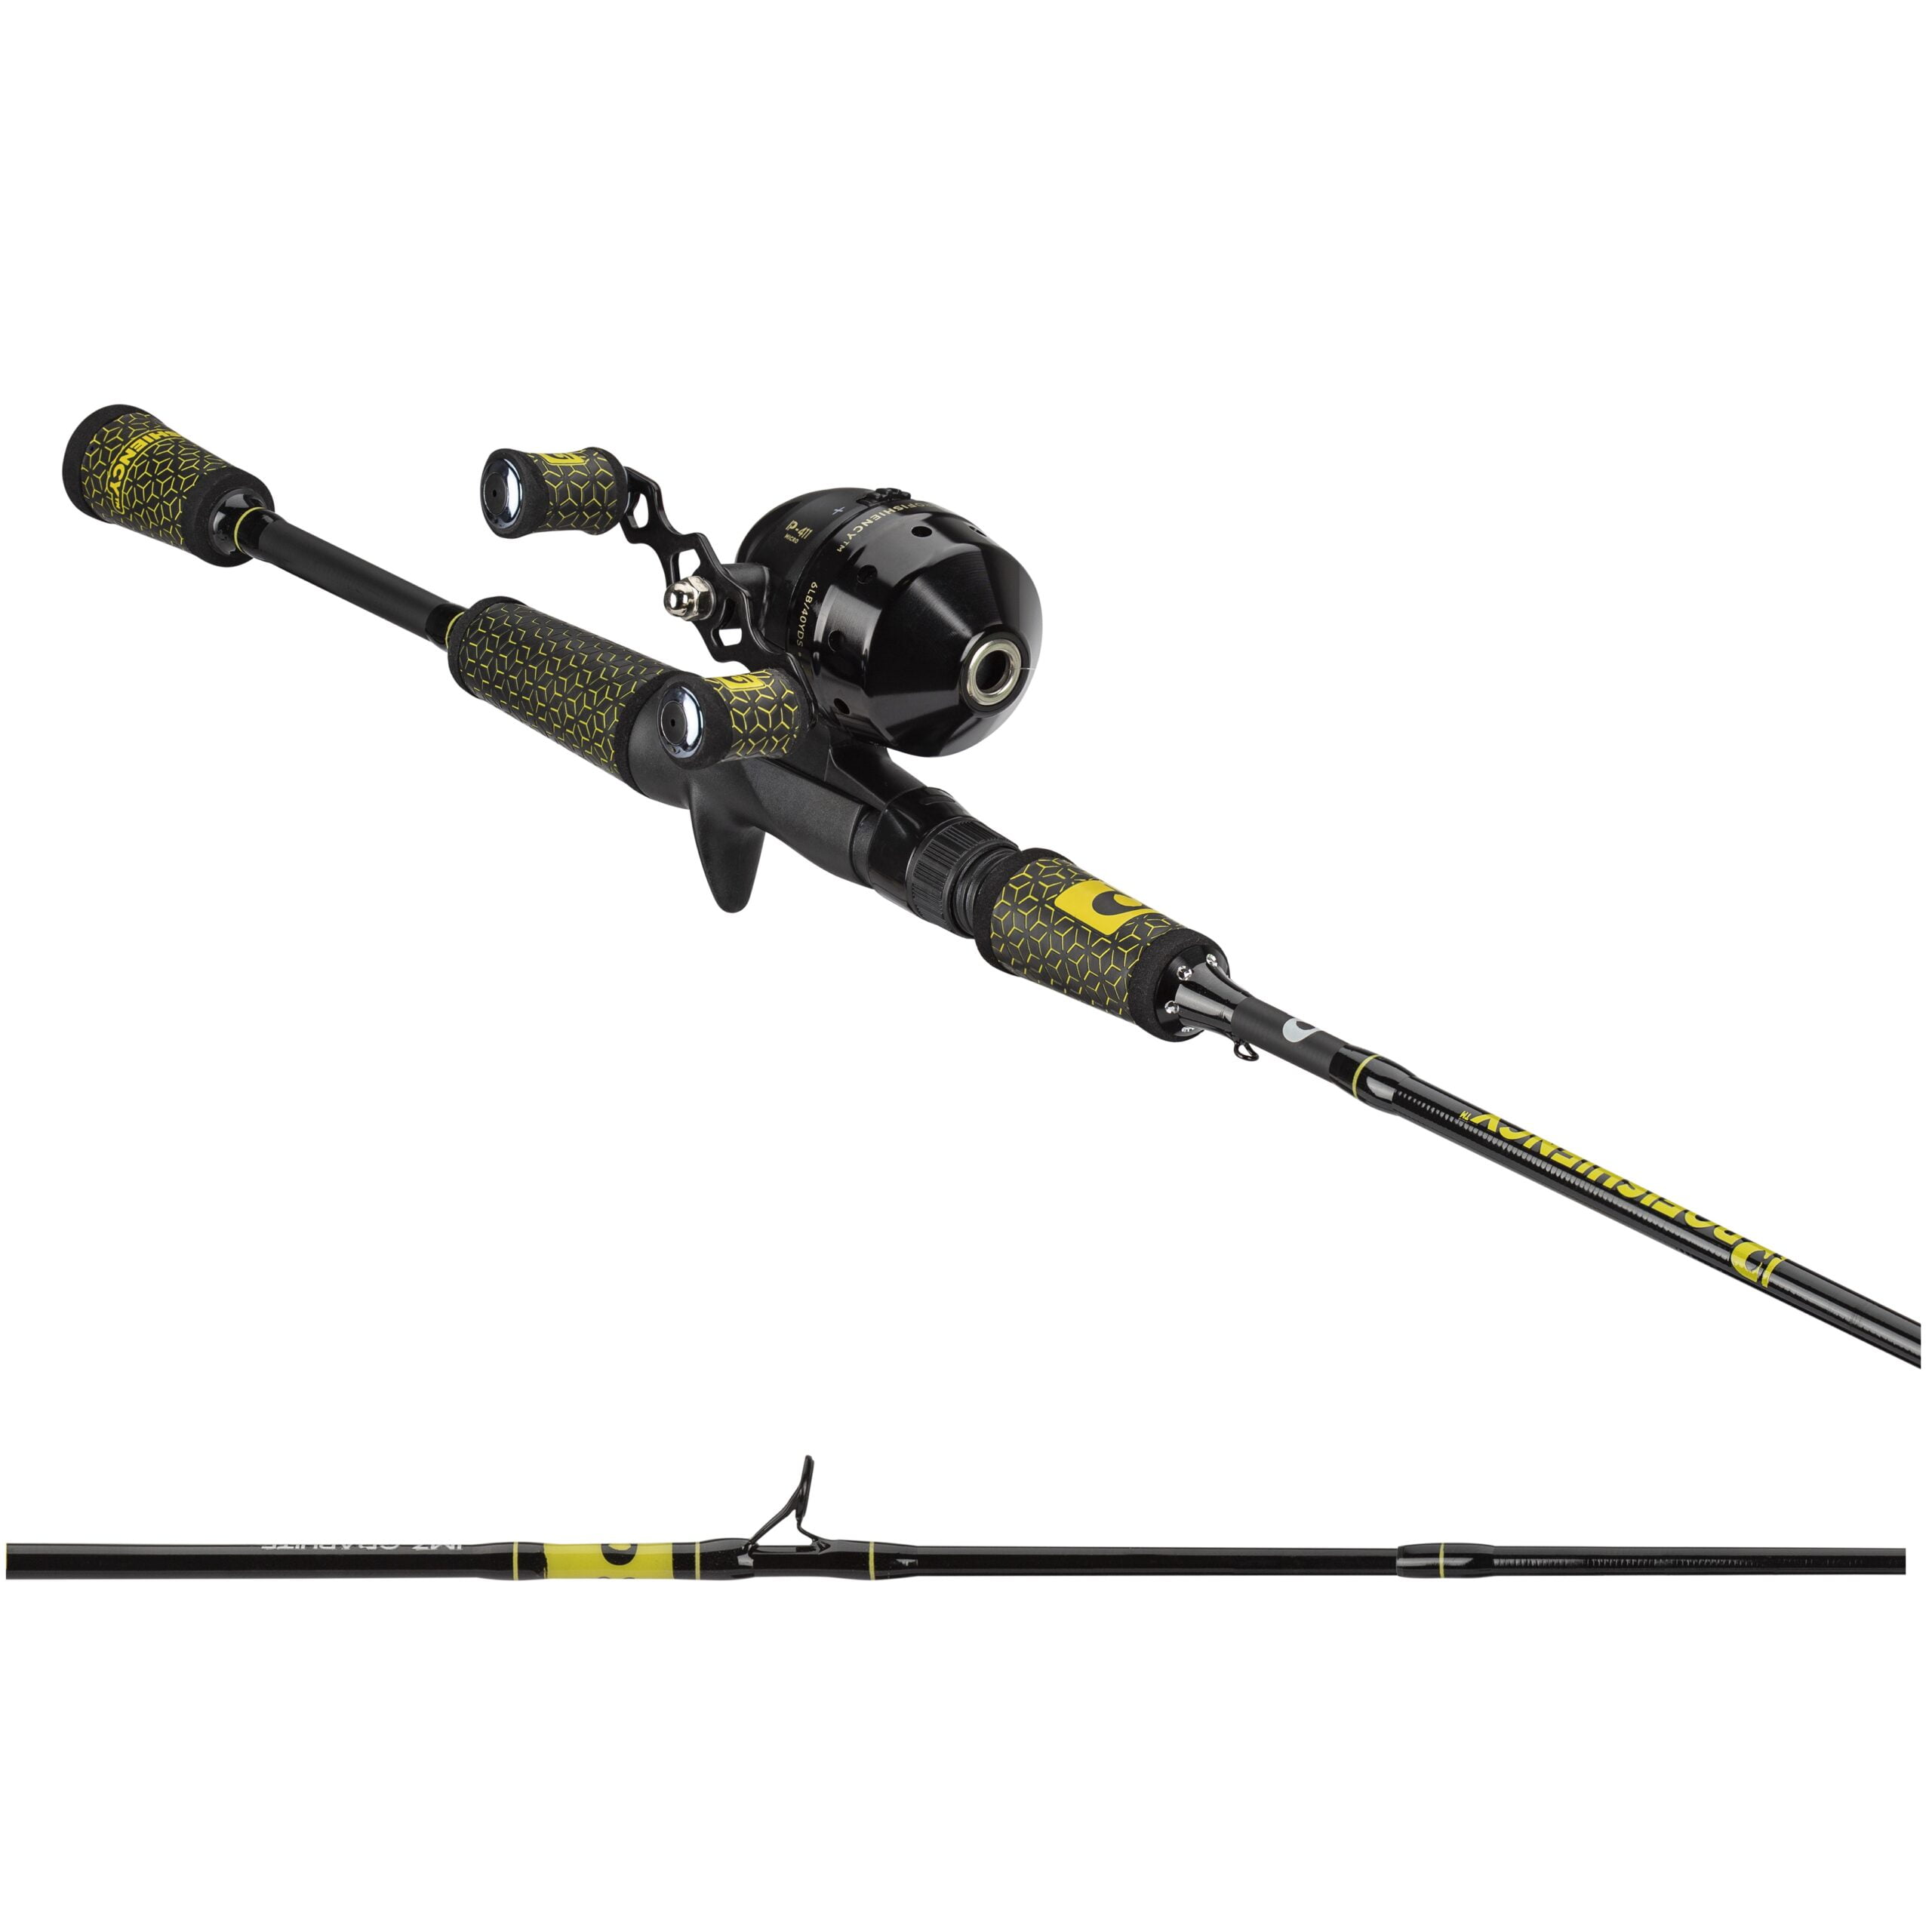 Favorite Defender Spinning and Bait Casting Fishing Rods  Carbon Fiber  Graphite Blend Fishing Rod - Buy Online - 213256222